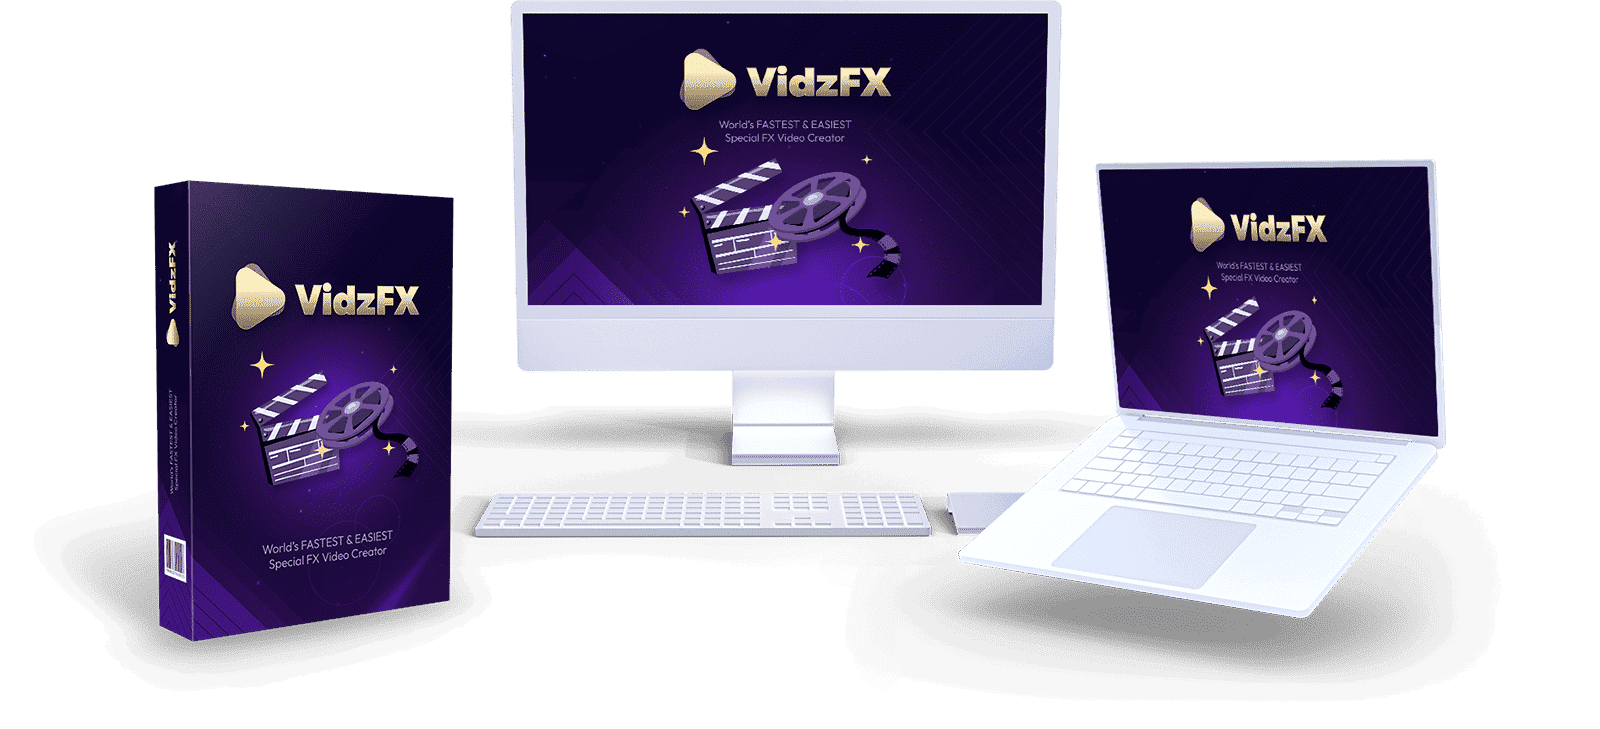 VidzFX Premium Software review